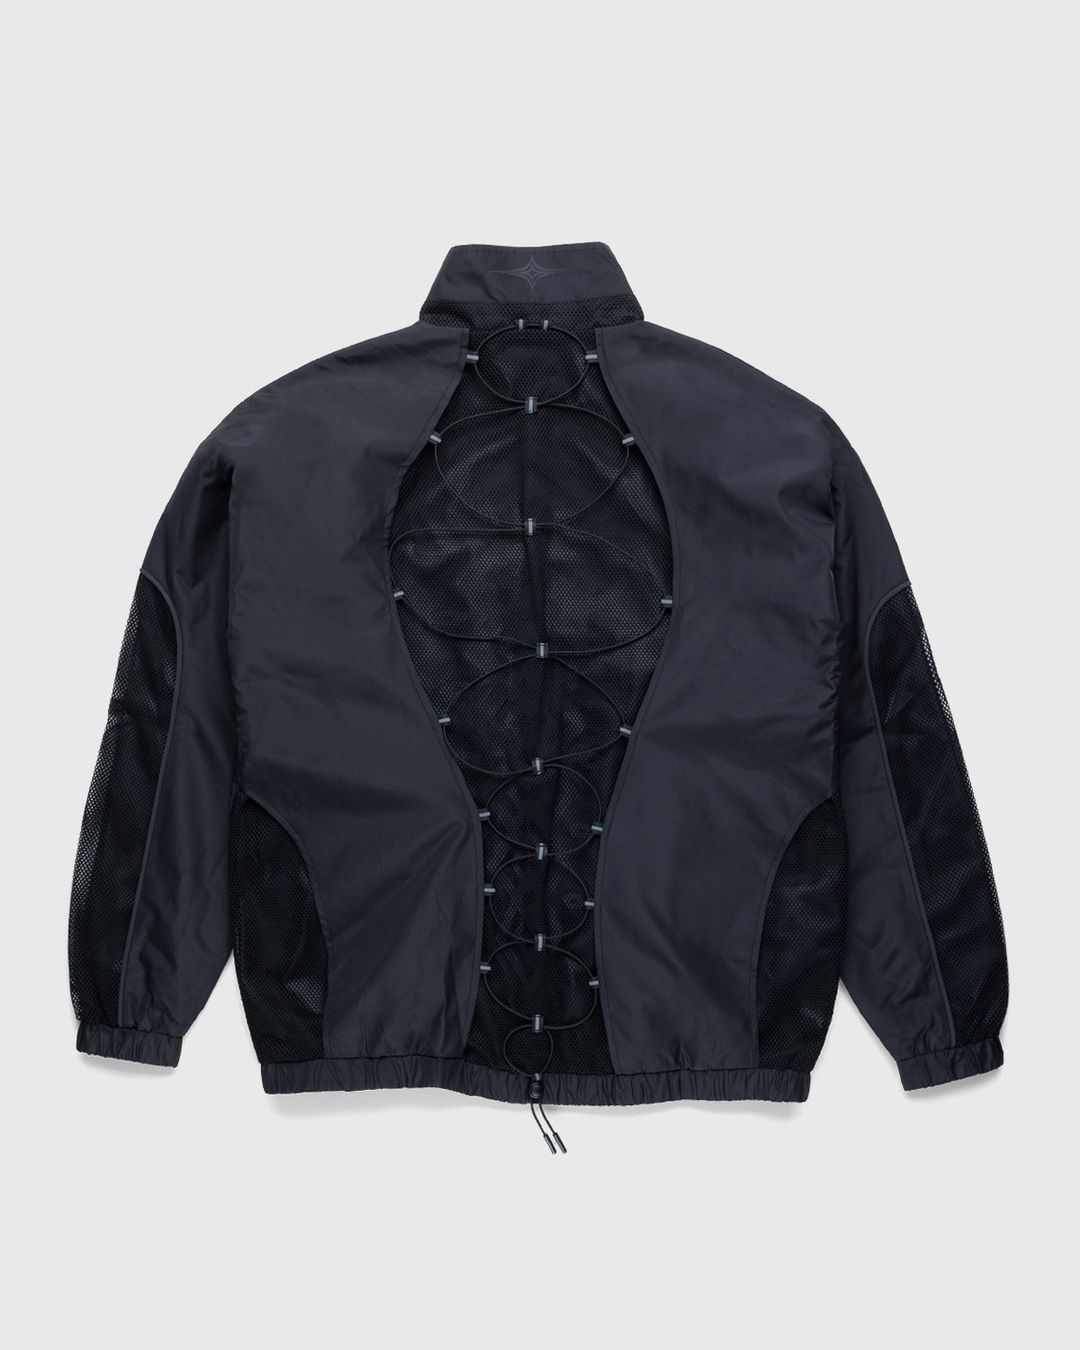 Umbro x Sucux – Zenomorph Jacket Black | Highsnobiety Shop